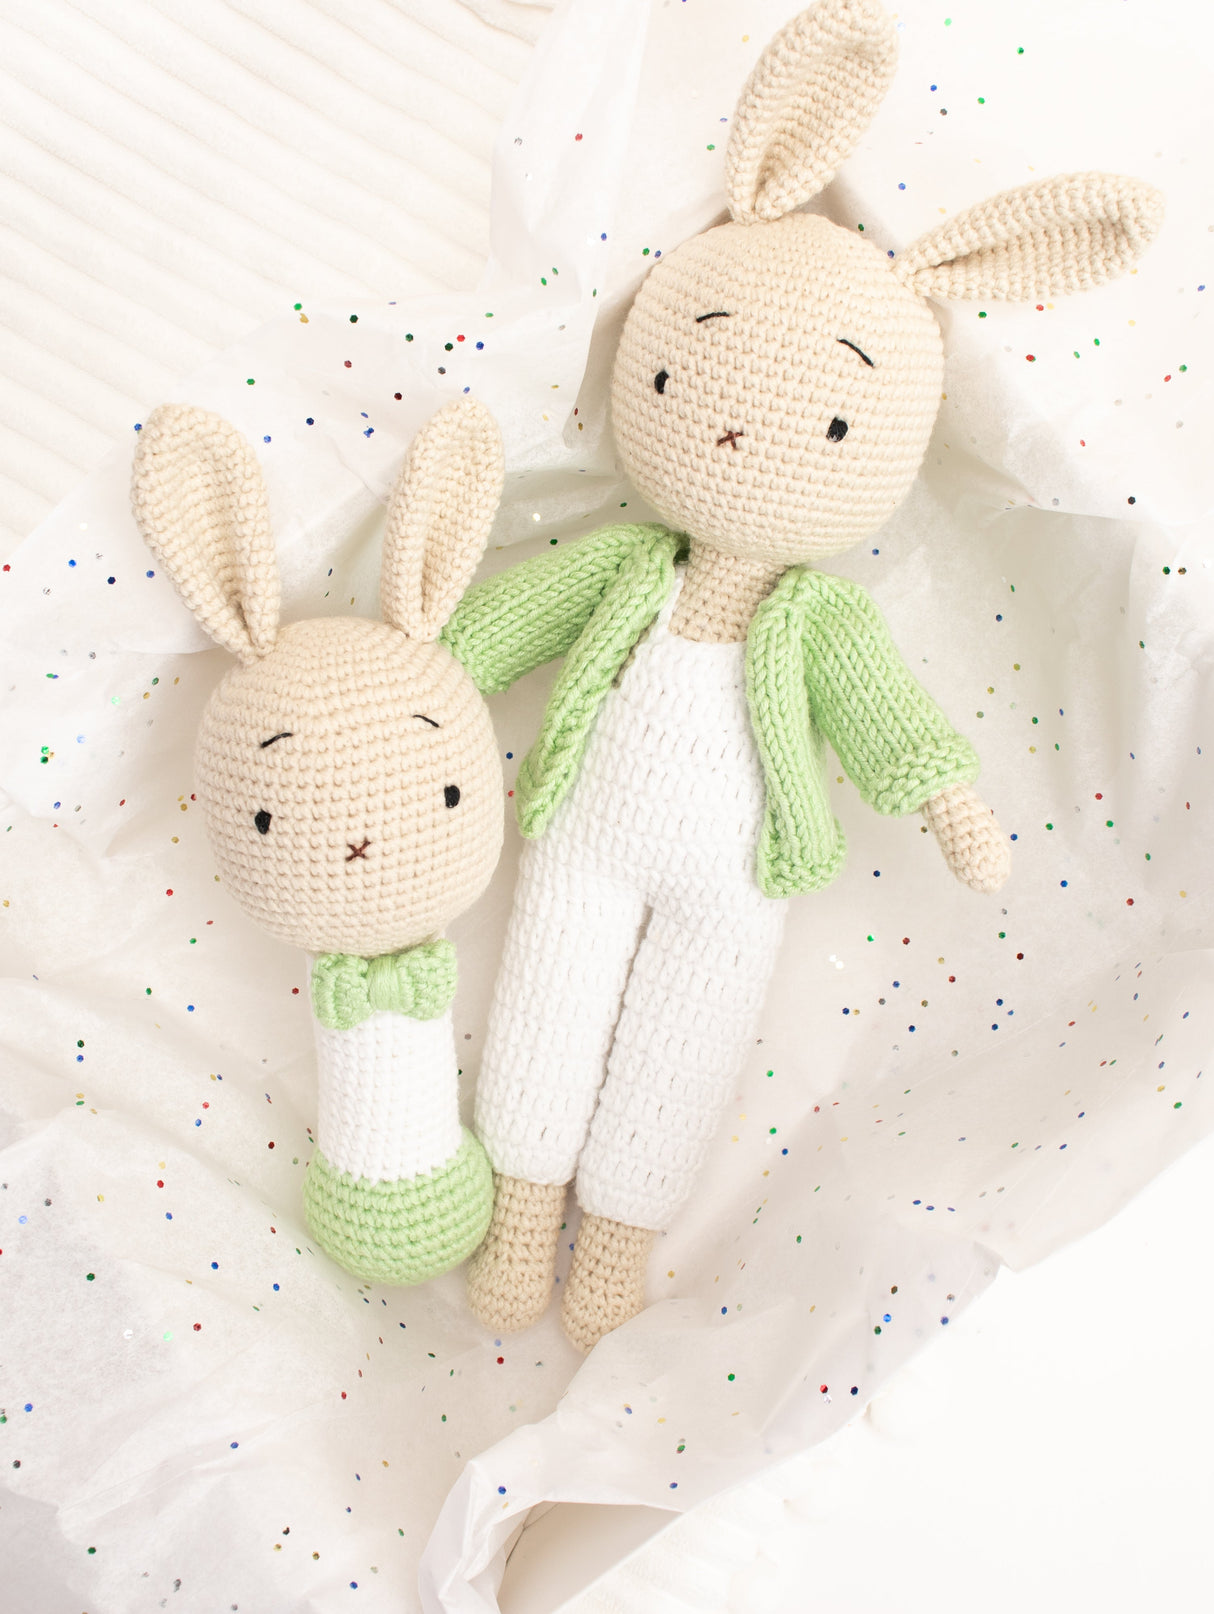 Crochet Doll - Rafael the bunny by Little Moy